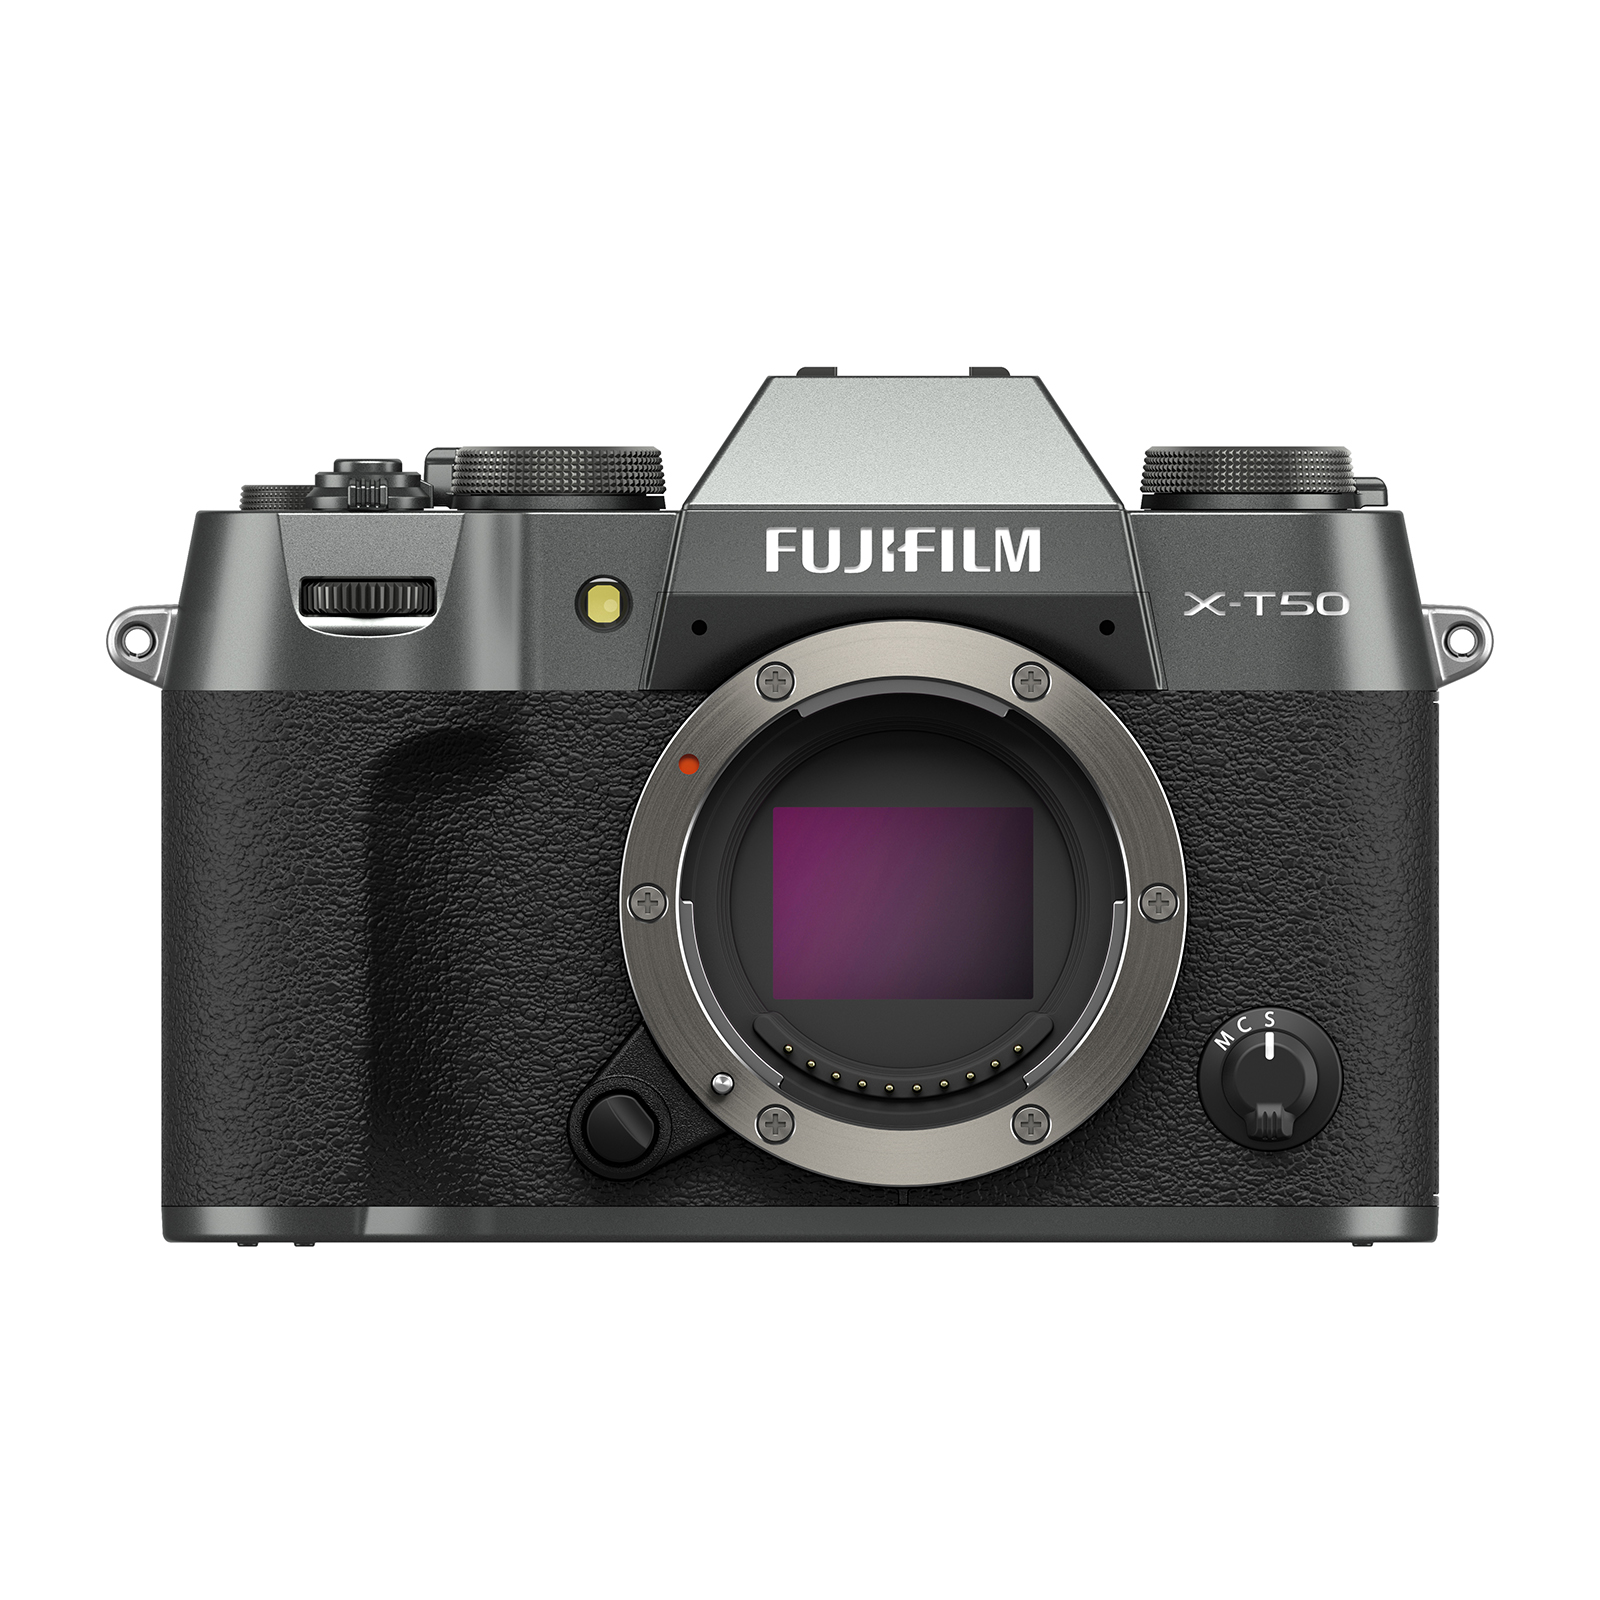 Fujifilm X-T50 Digital Camera Body - Charcoal